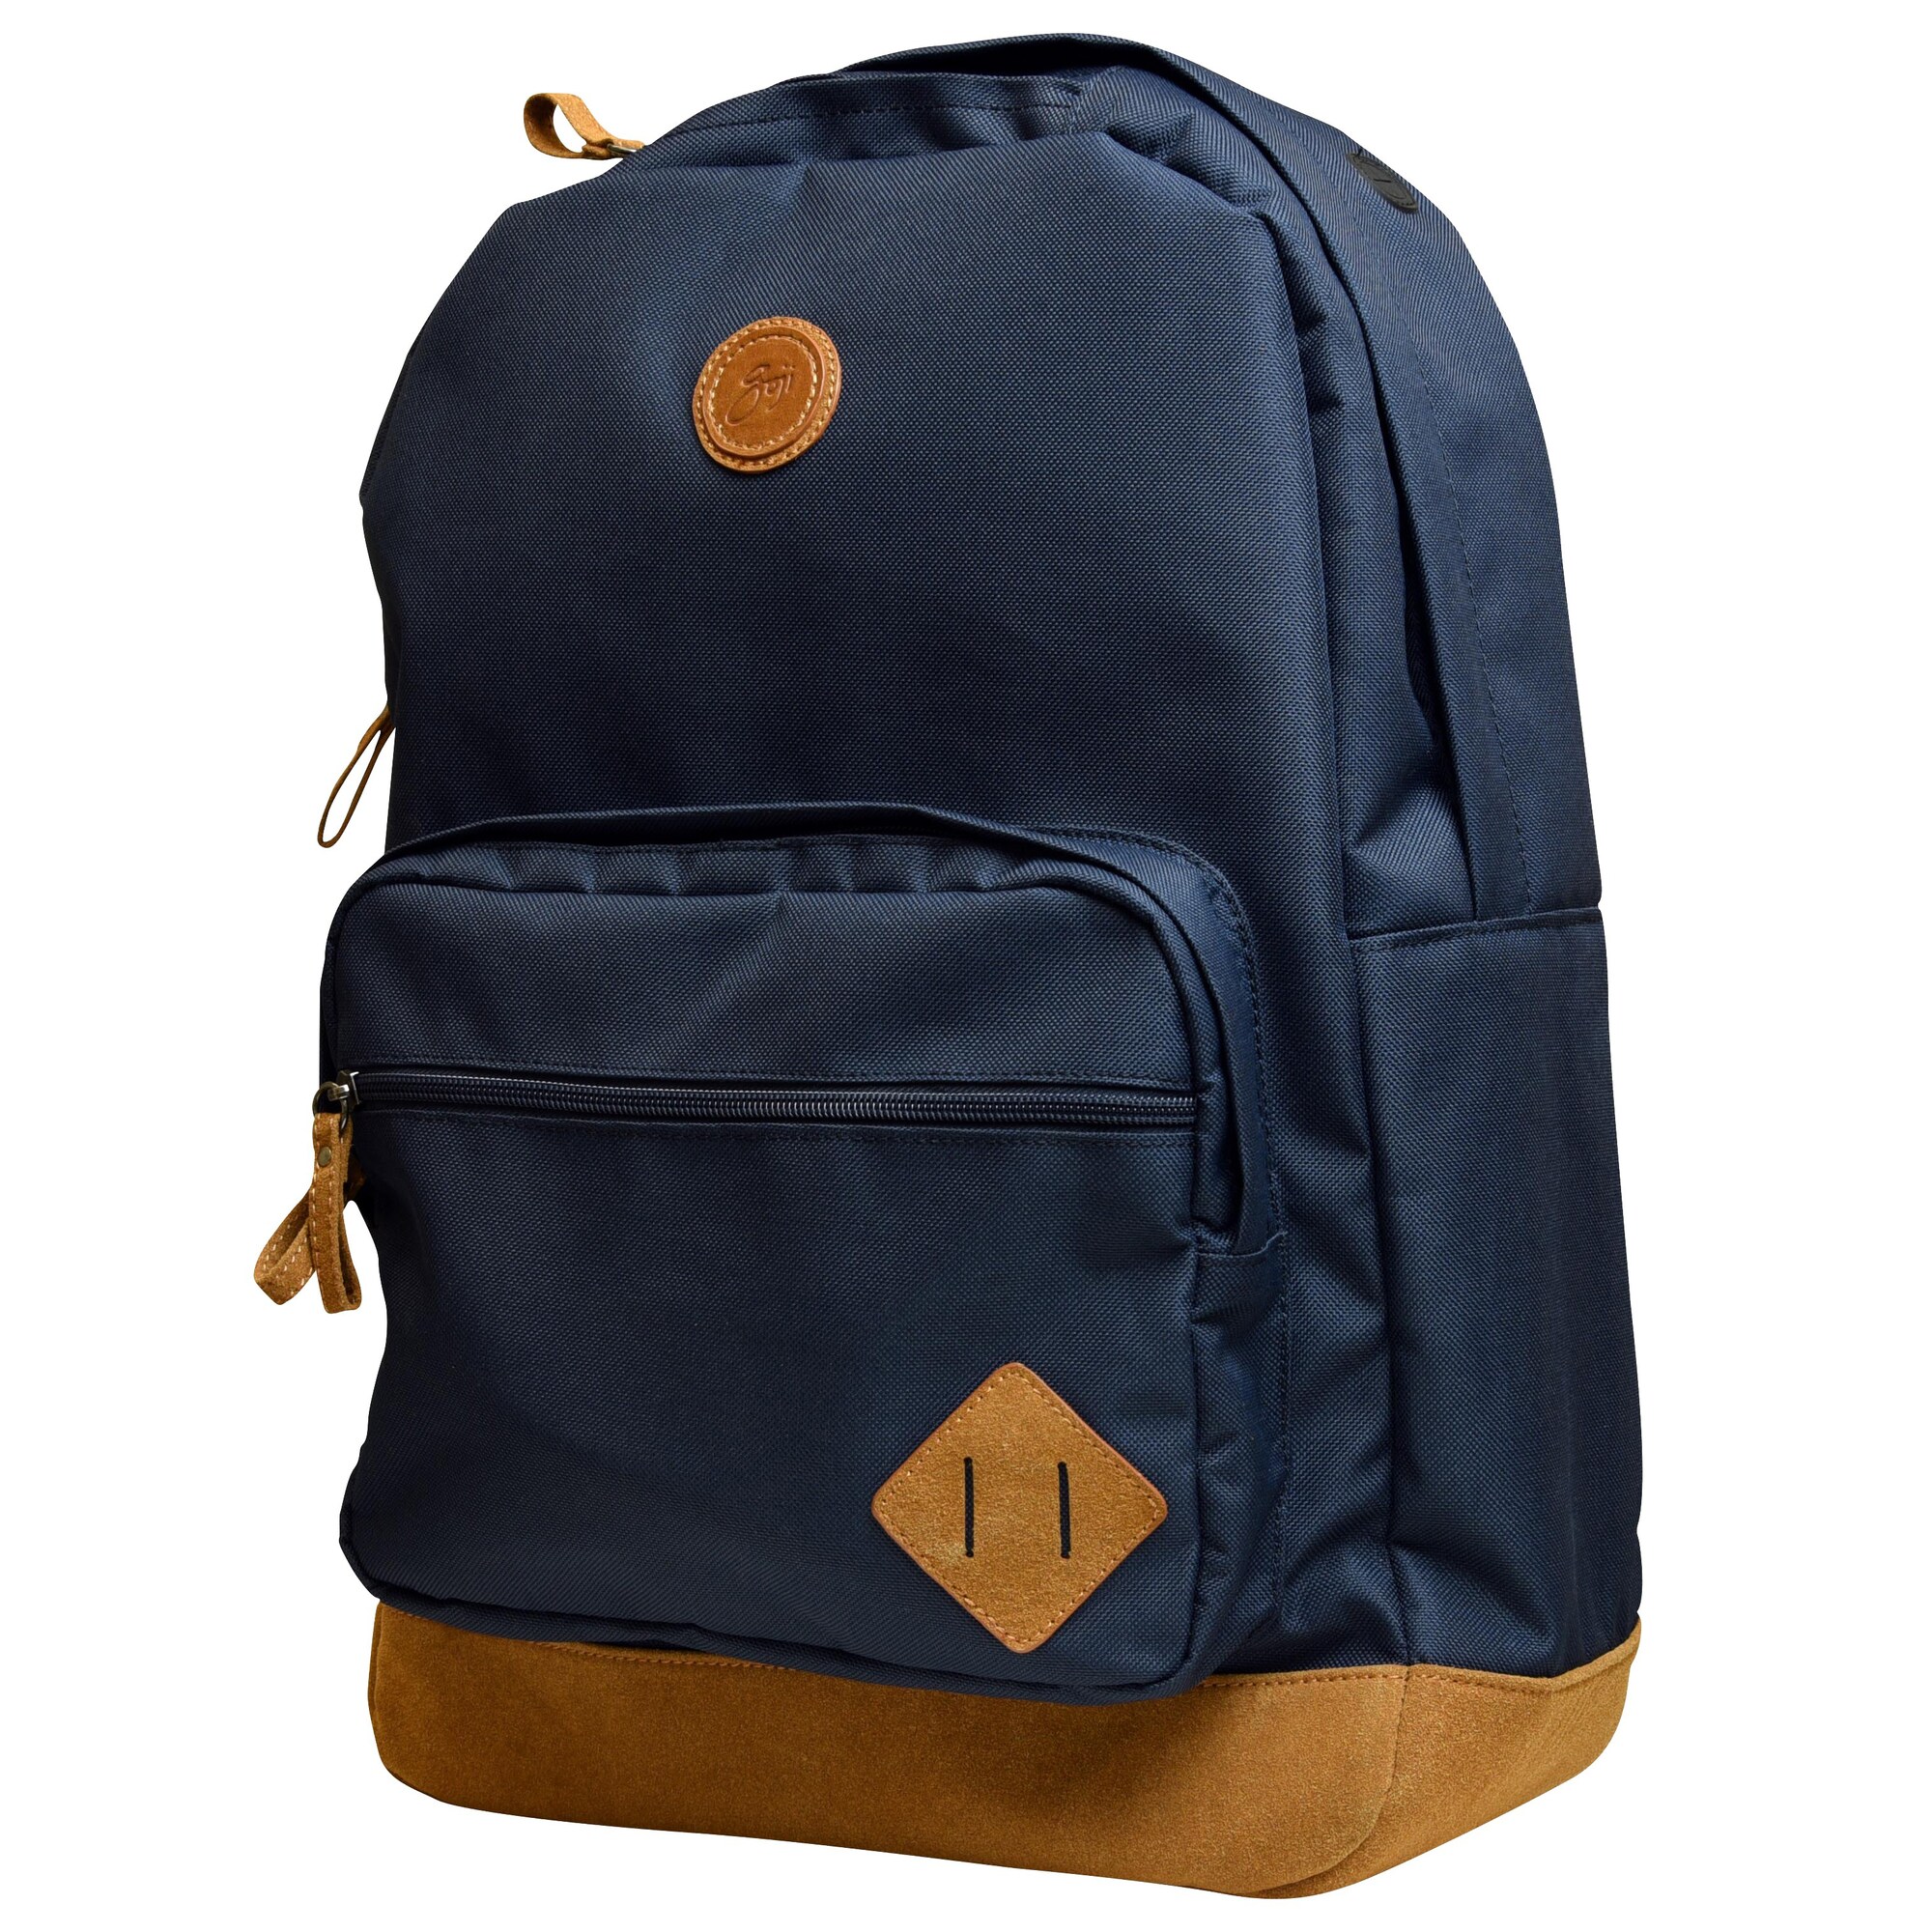 Perfekt skole/studie rygsæk til 15.6" bærbar PC - Elgiganten